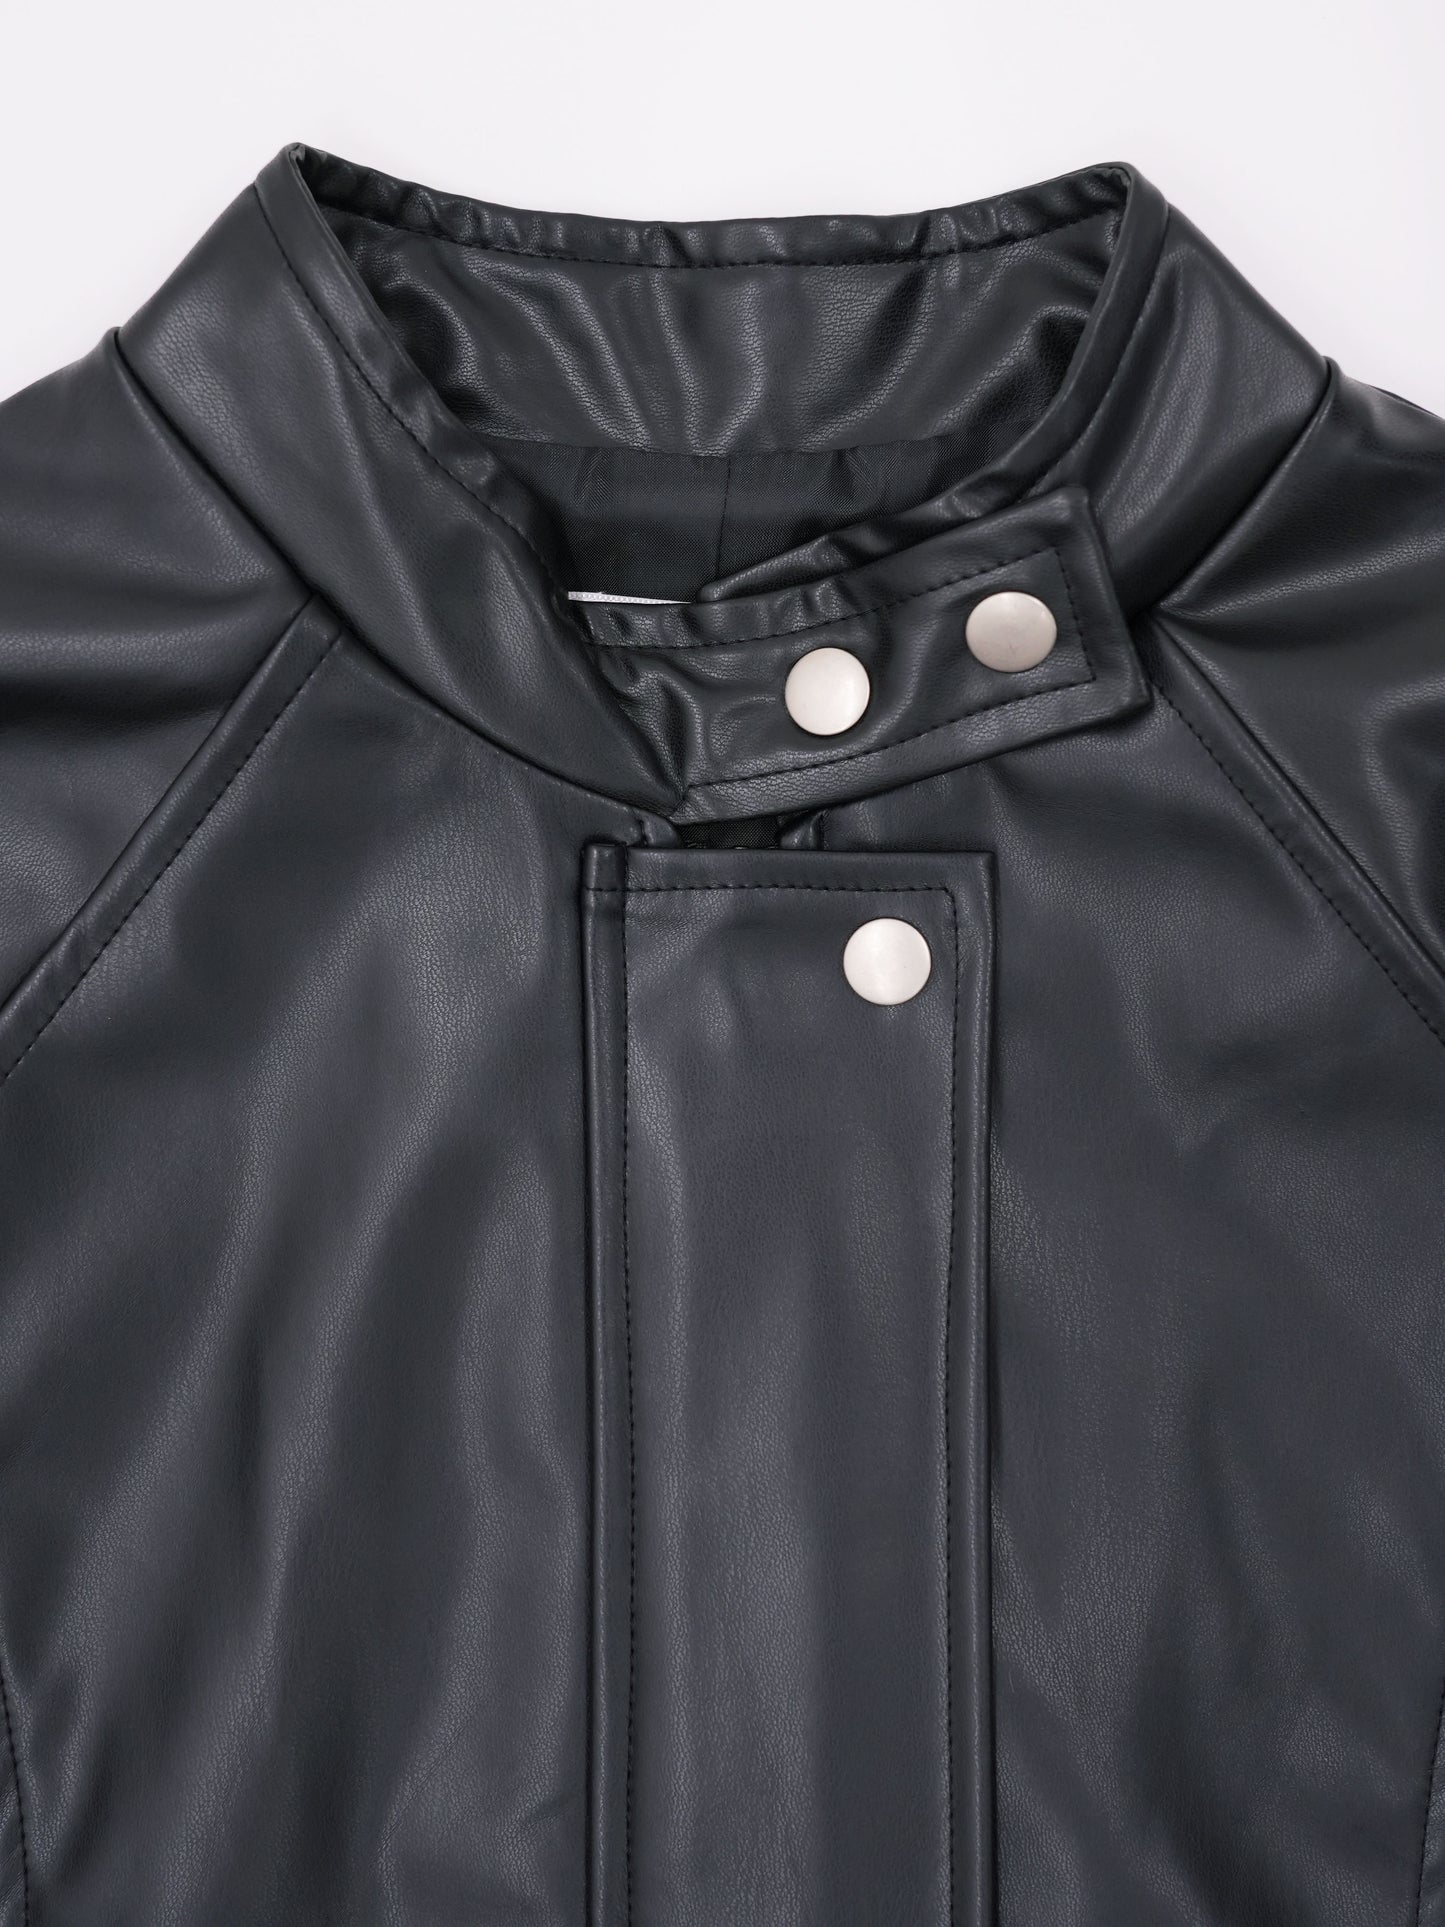 fake leather riders jacket